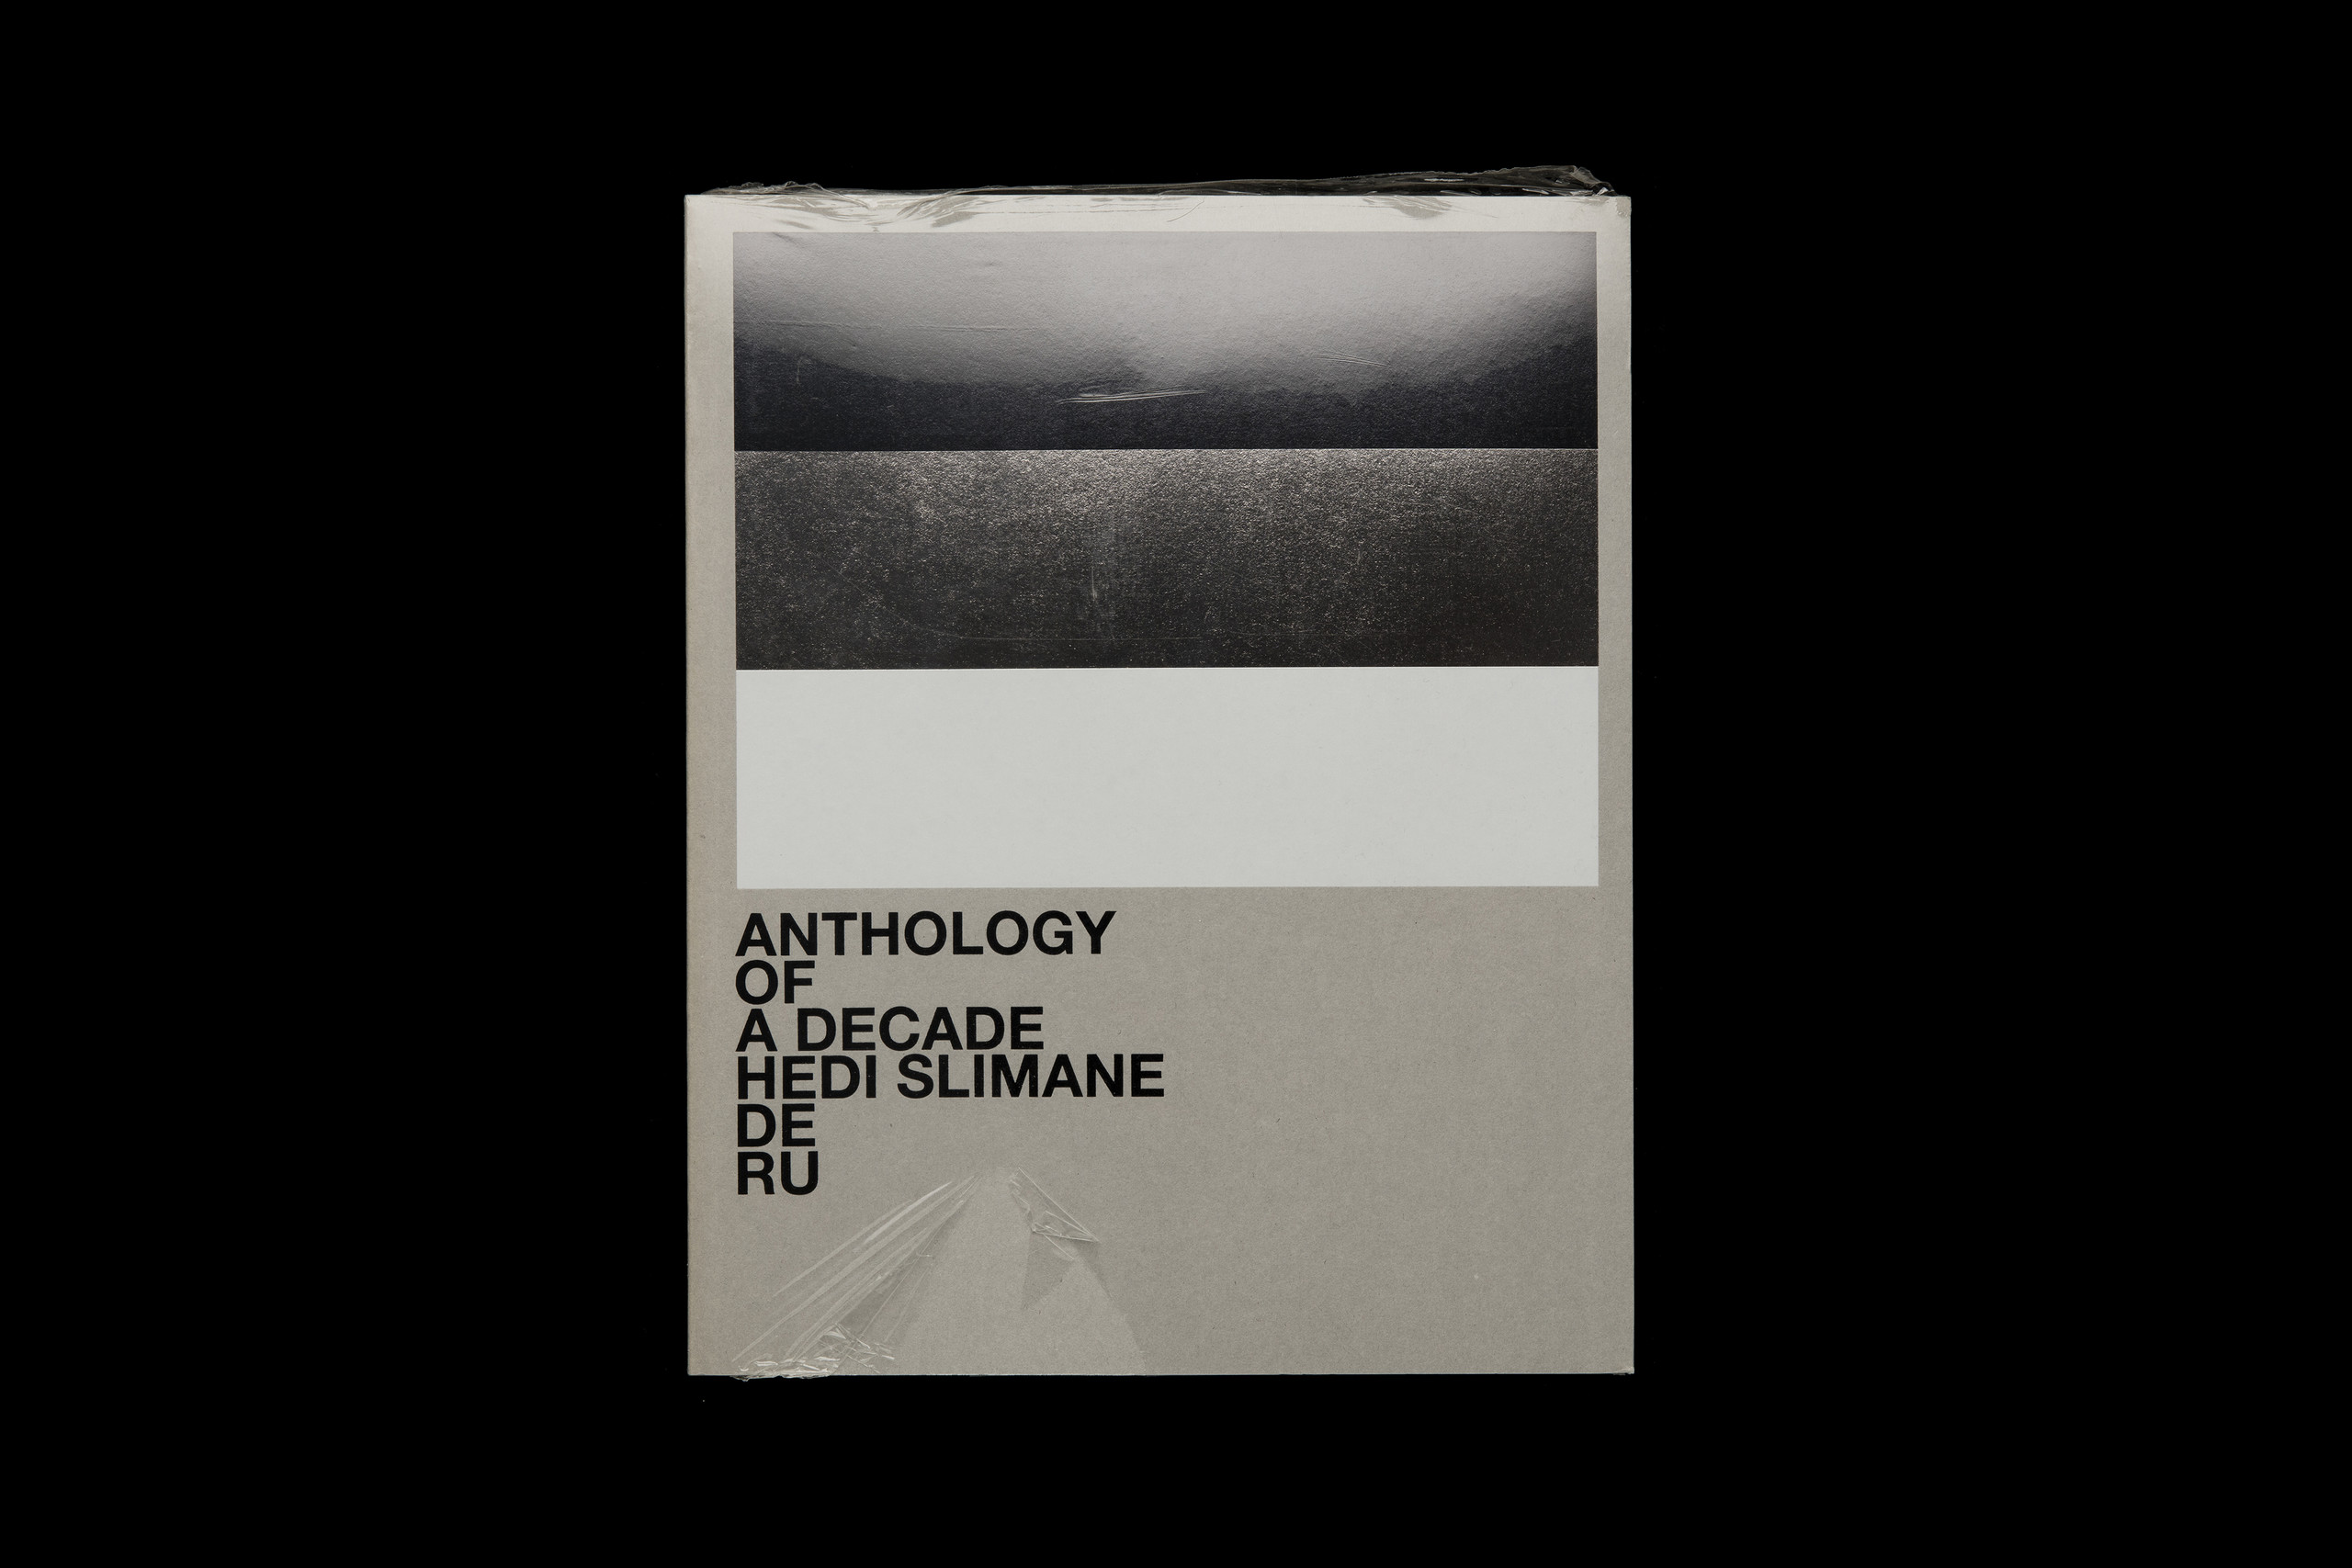 Anthology of a Decade, DE RU, by Hedi Slimane